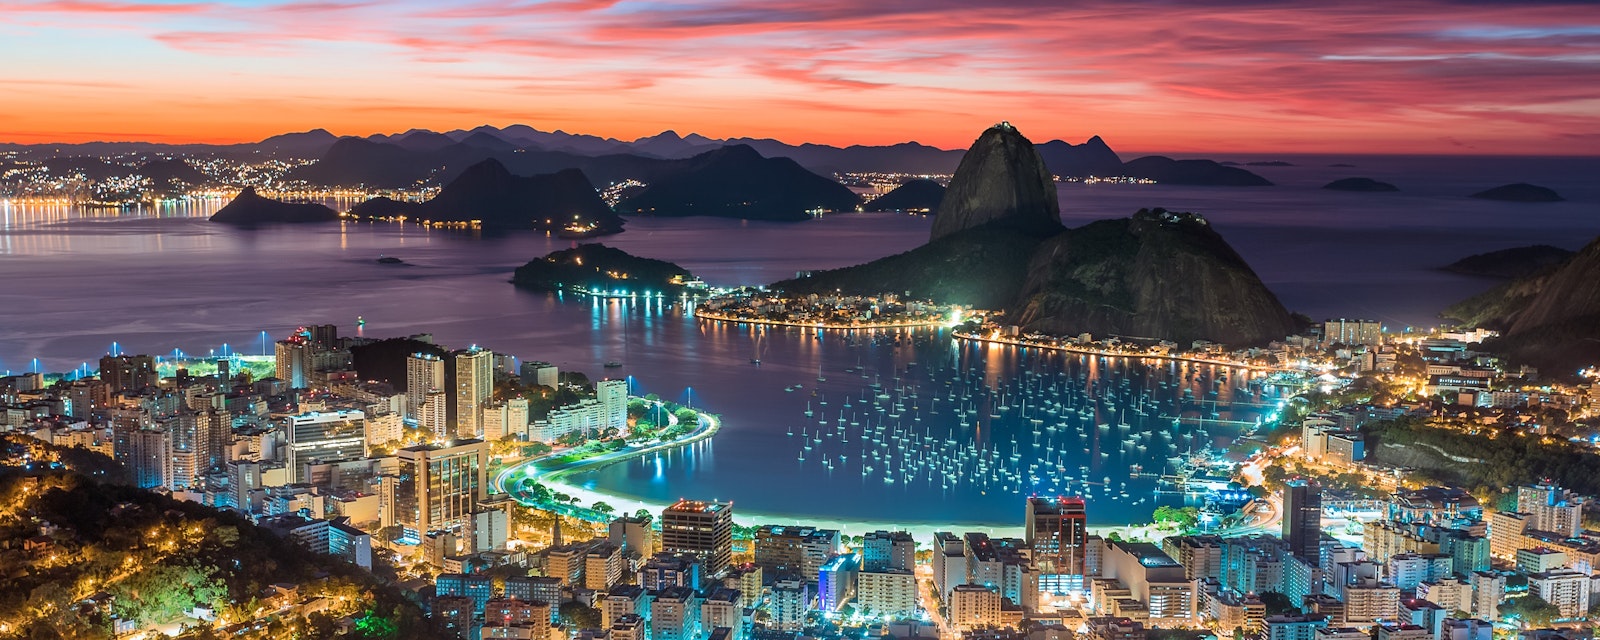 Sunset,In,Rio,De,Janeiro,-,Brazil